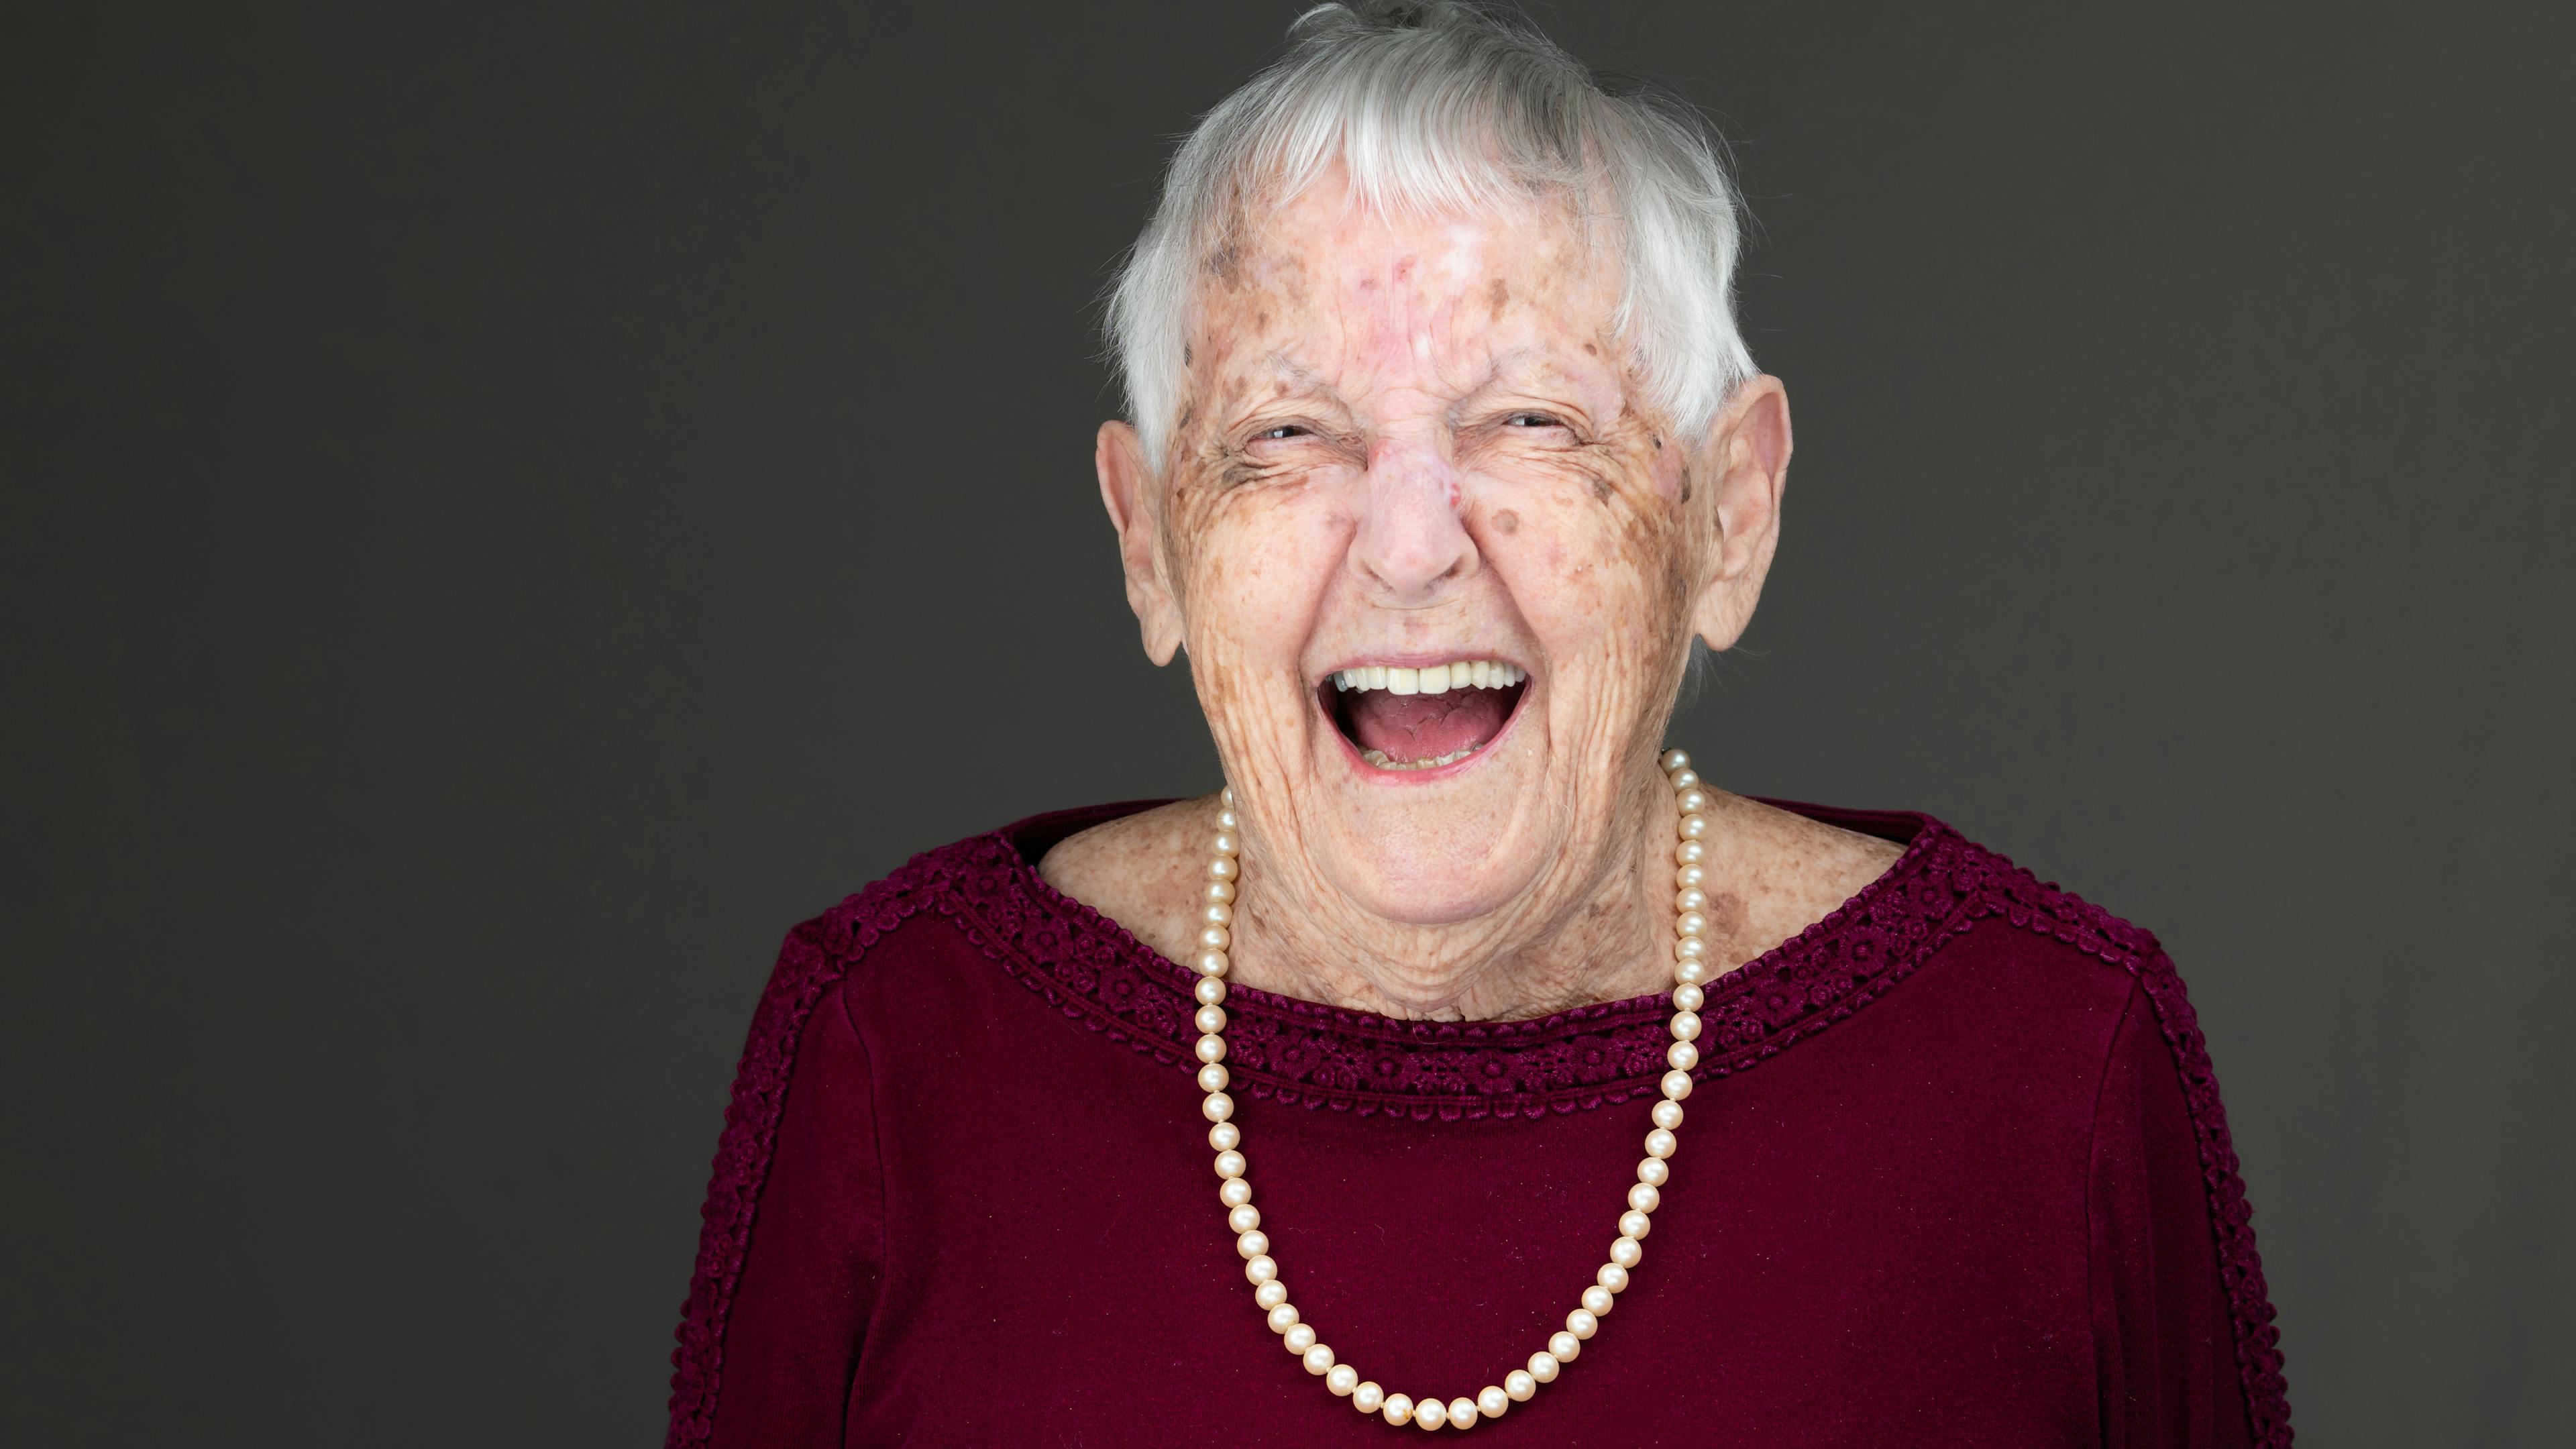 Laughing senior headshot courtesy of Peter Istvan Photography